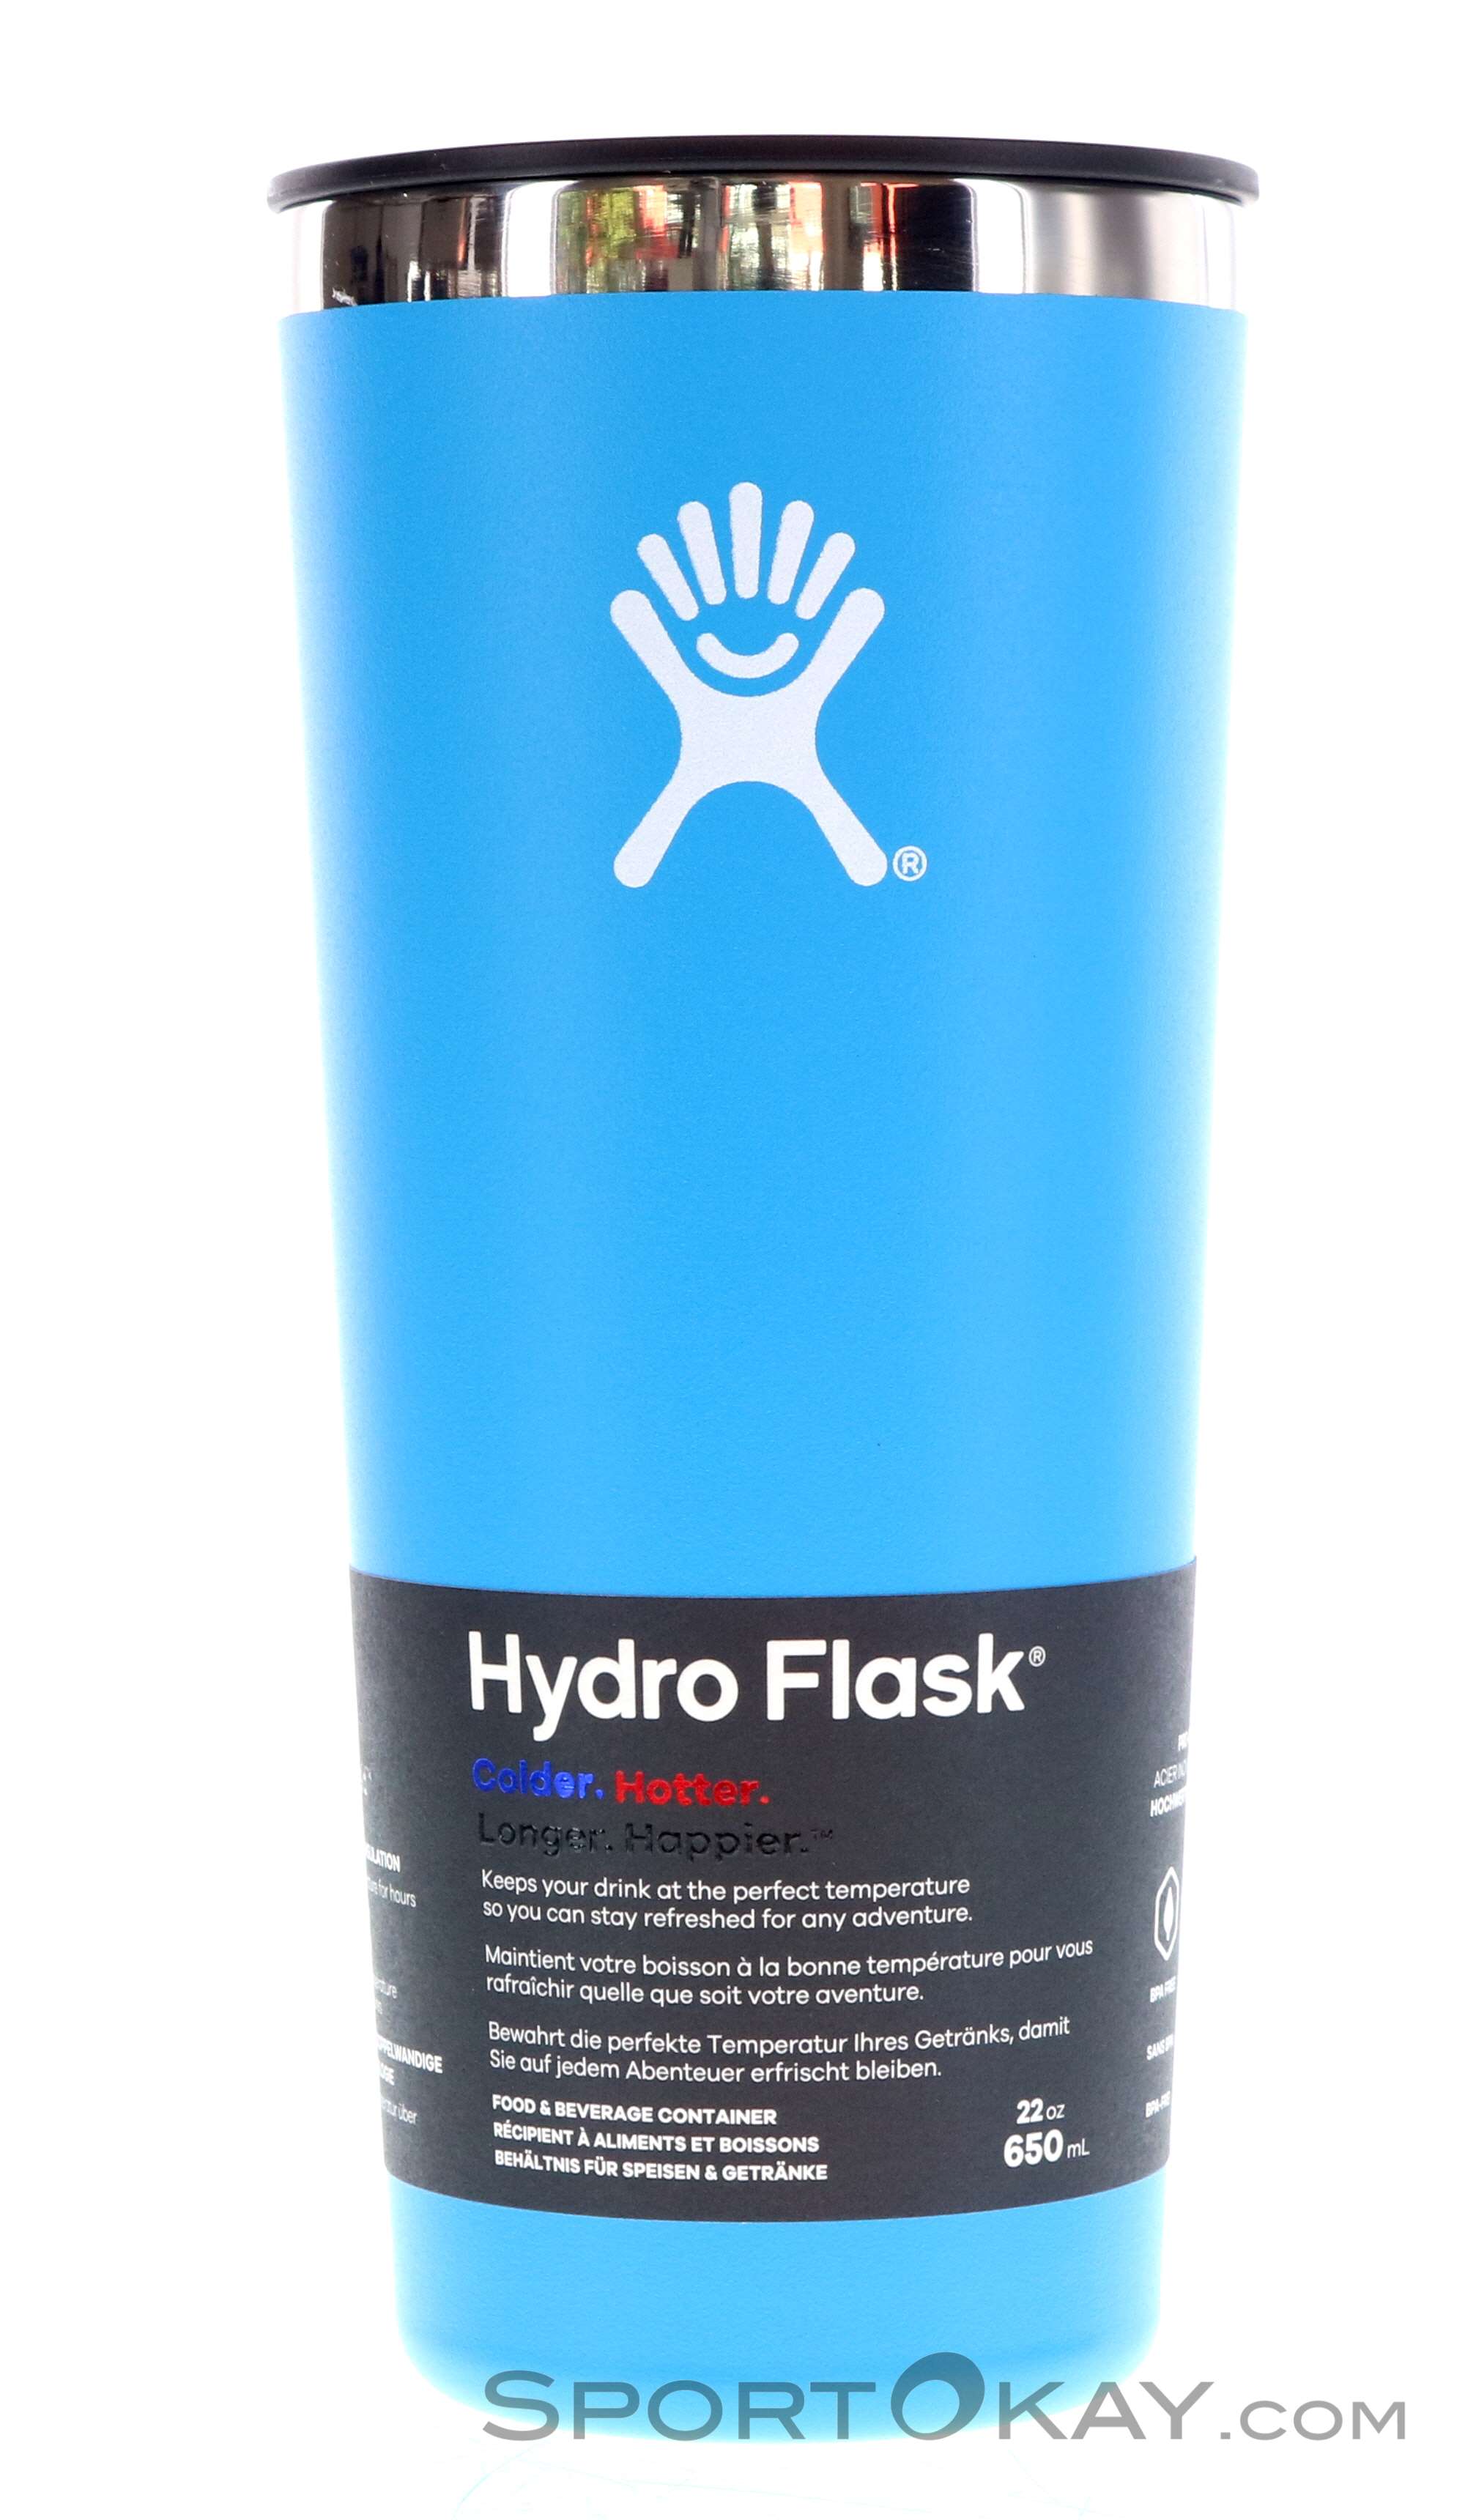 Hydro Flask 22oz Tumbler - Sports Den